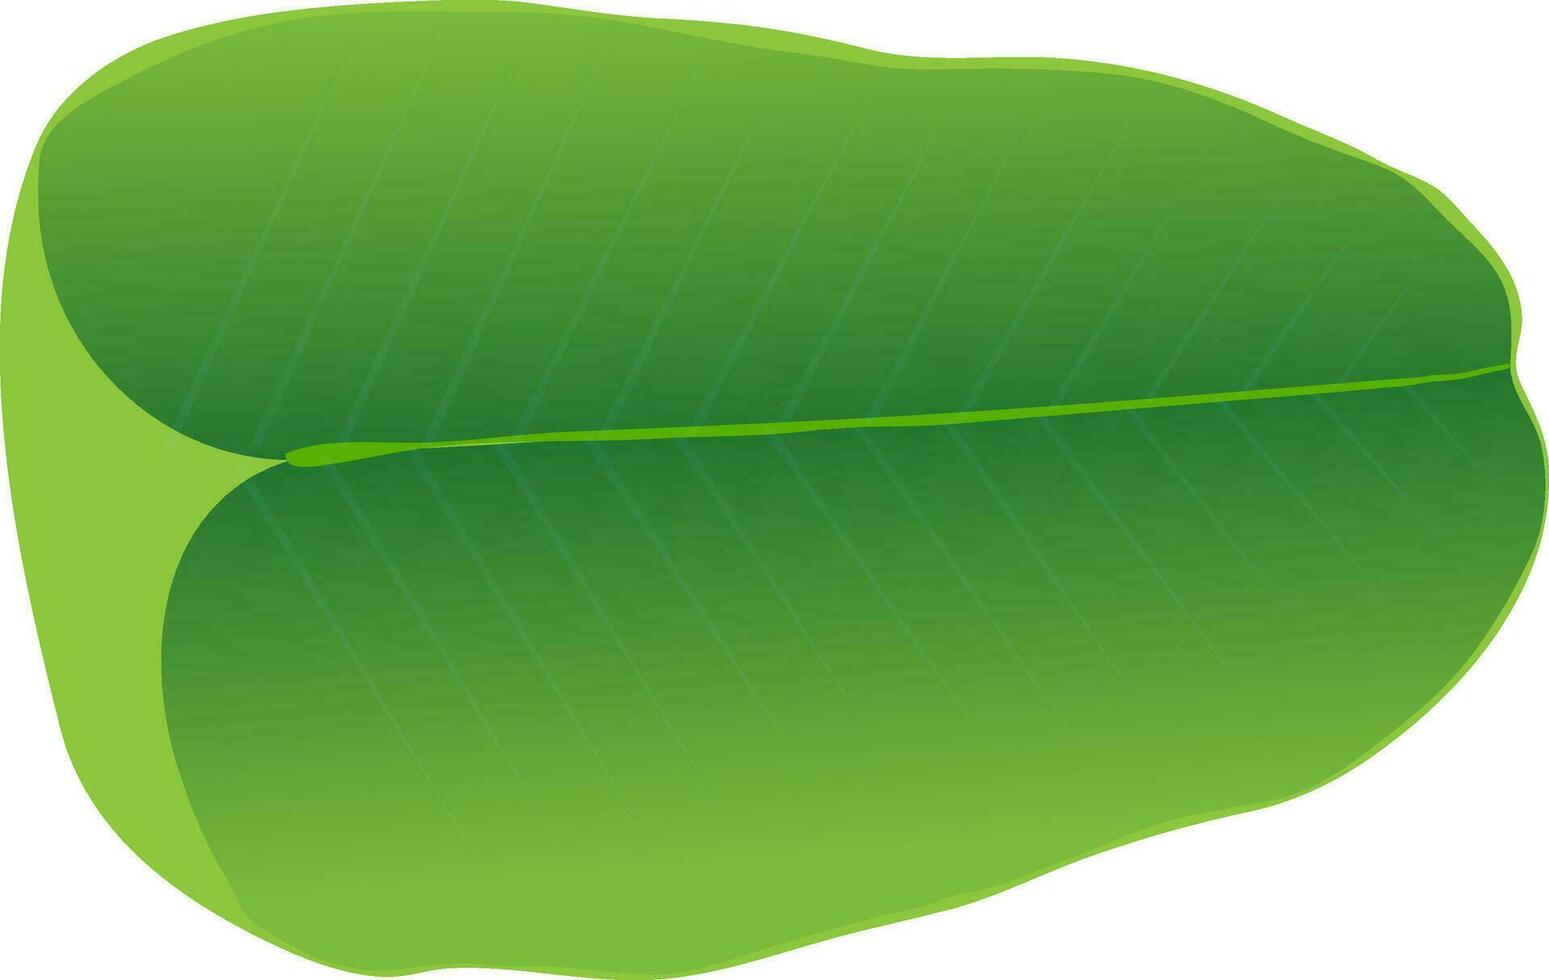 Illustration von Grün Banane Blatt. vektor